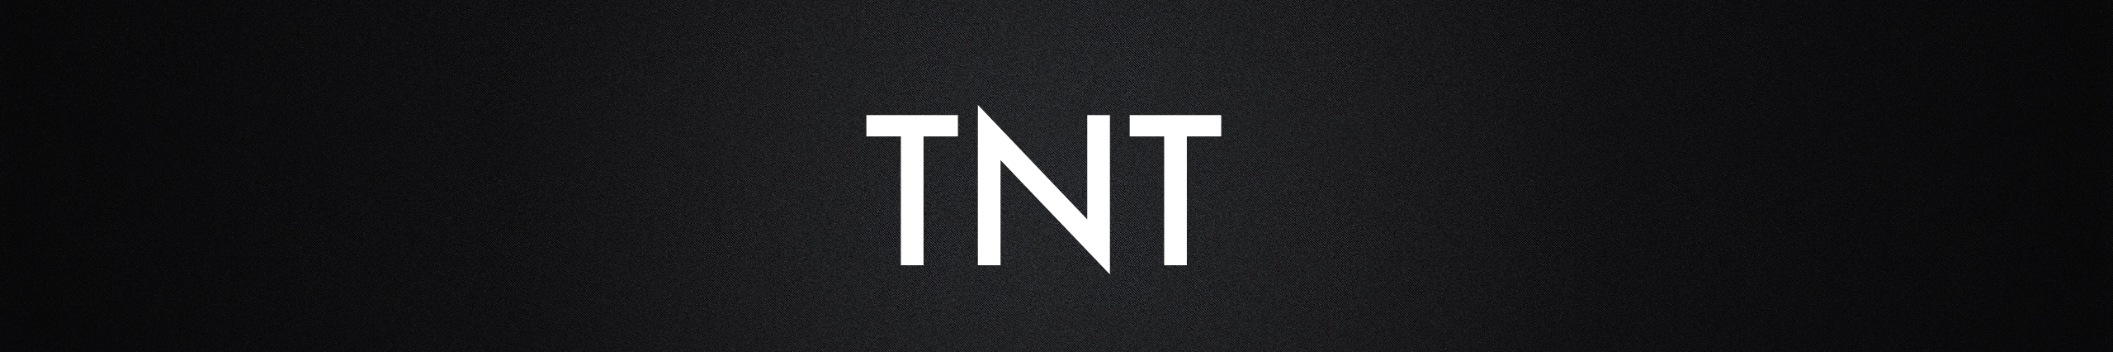 TNT official